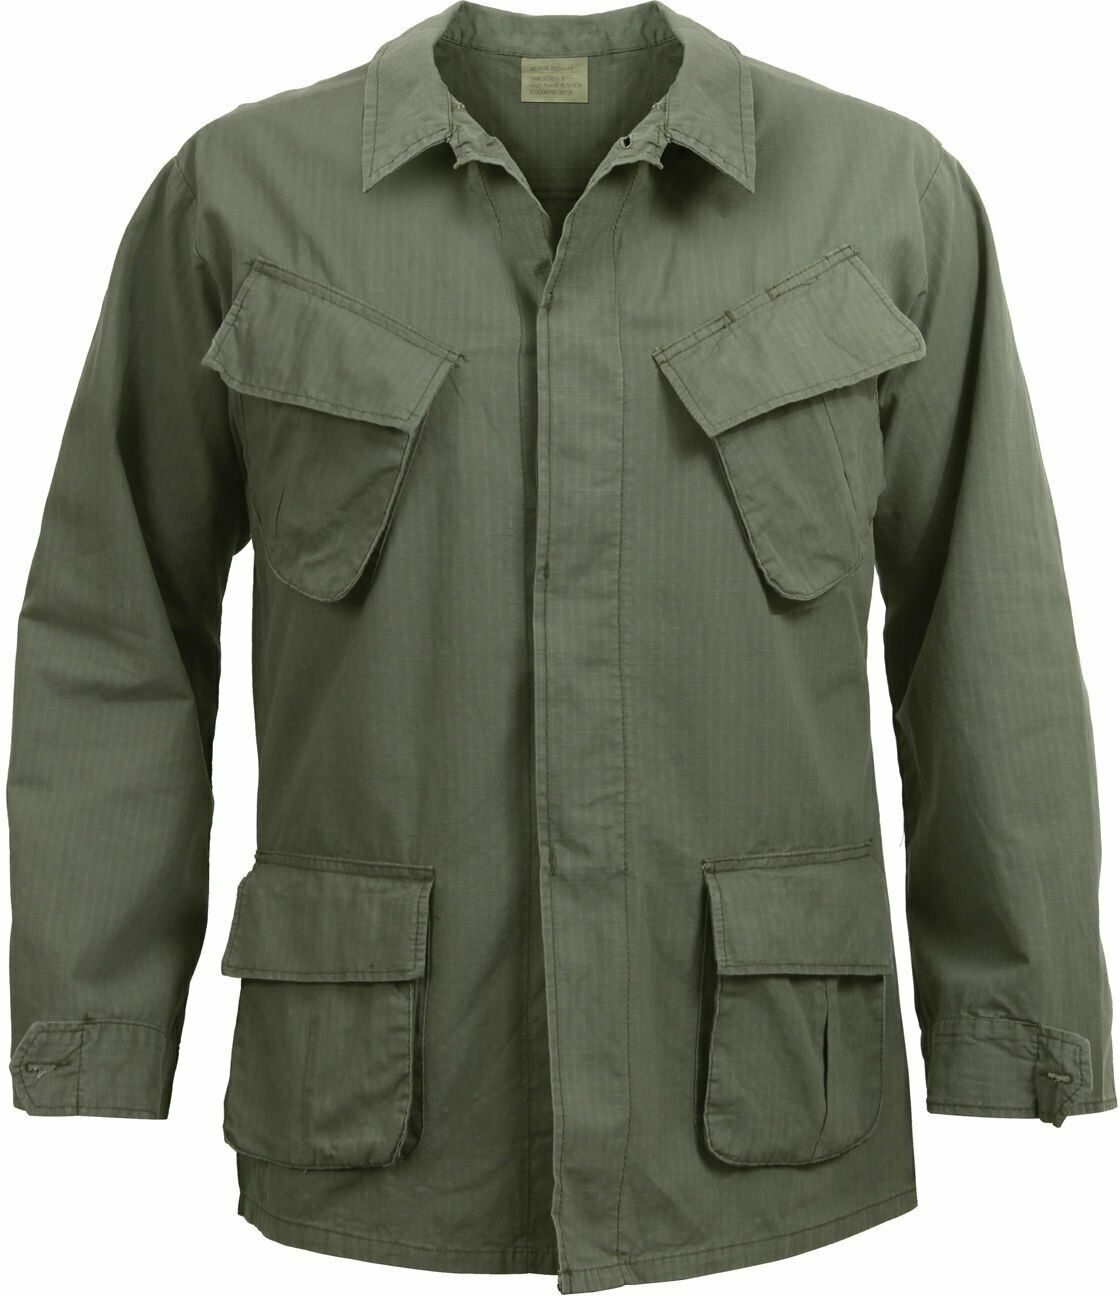 Olive Drab Vintage Vietnam Military 100% Cotton Rip-Stop Fatigue Shirt ...